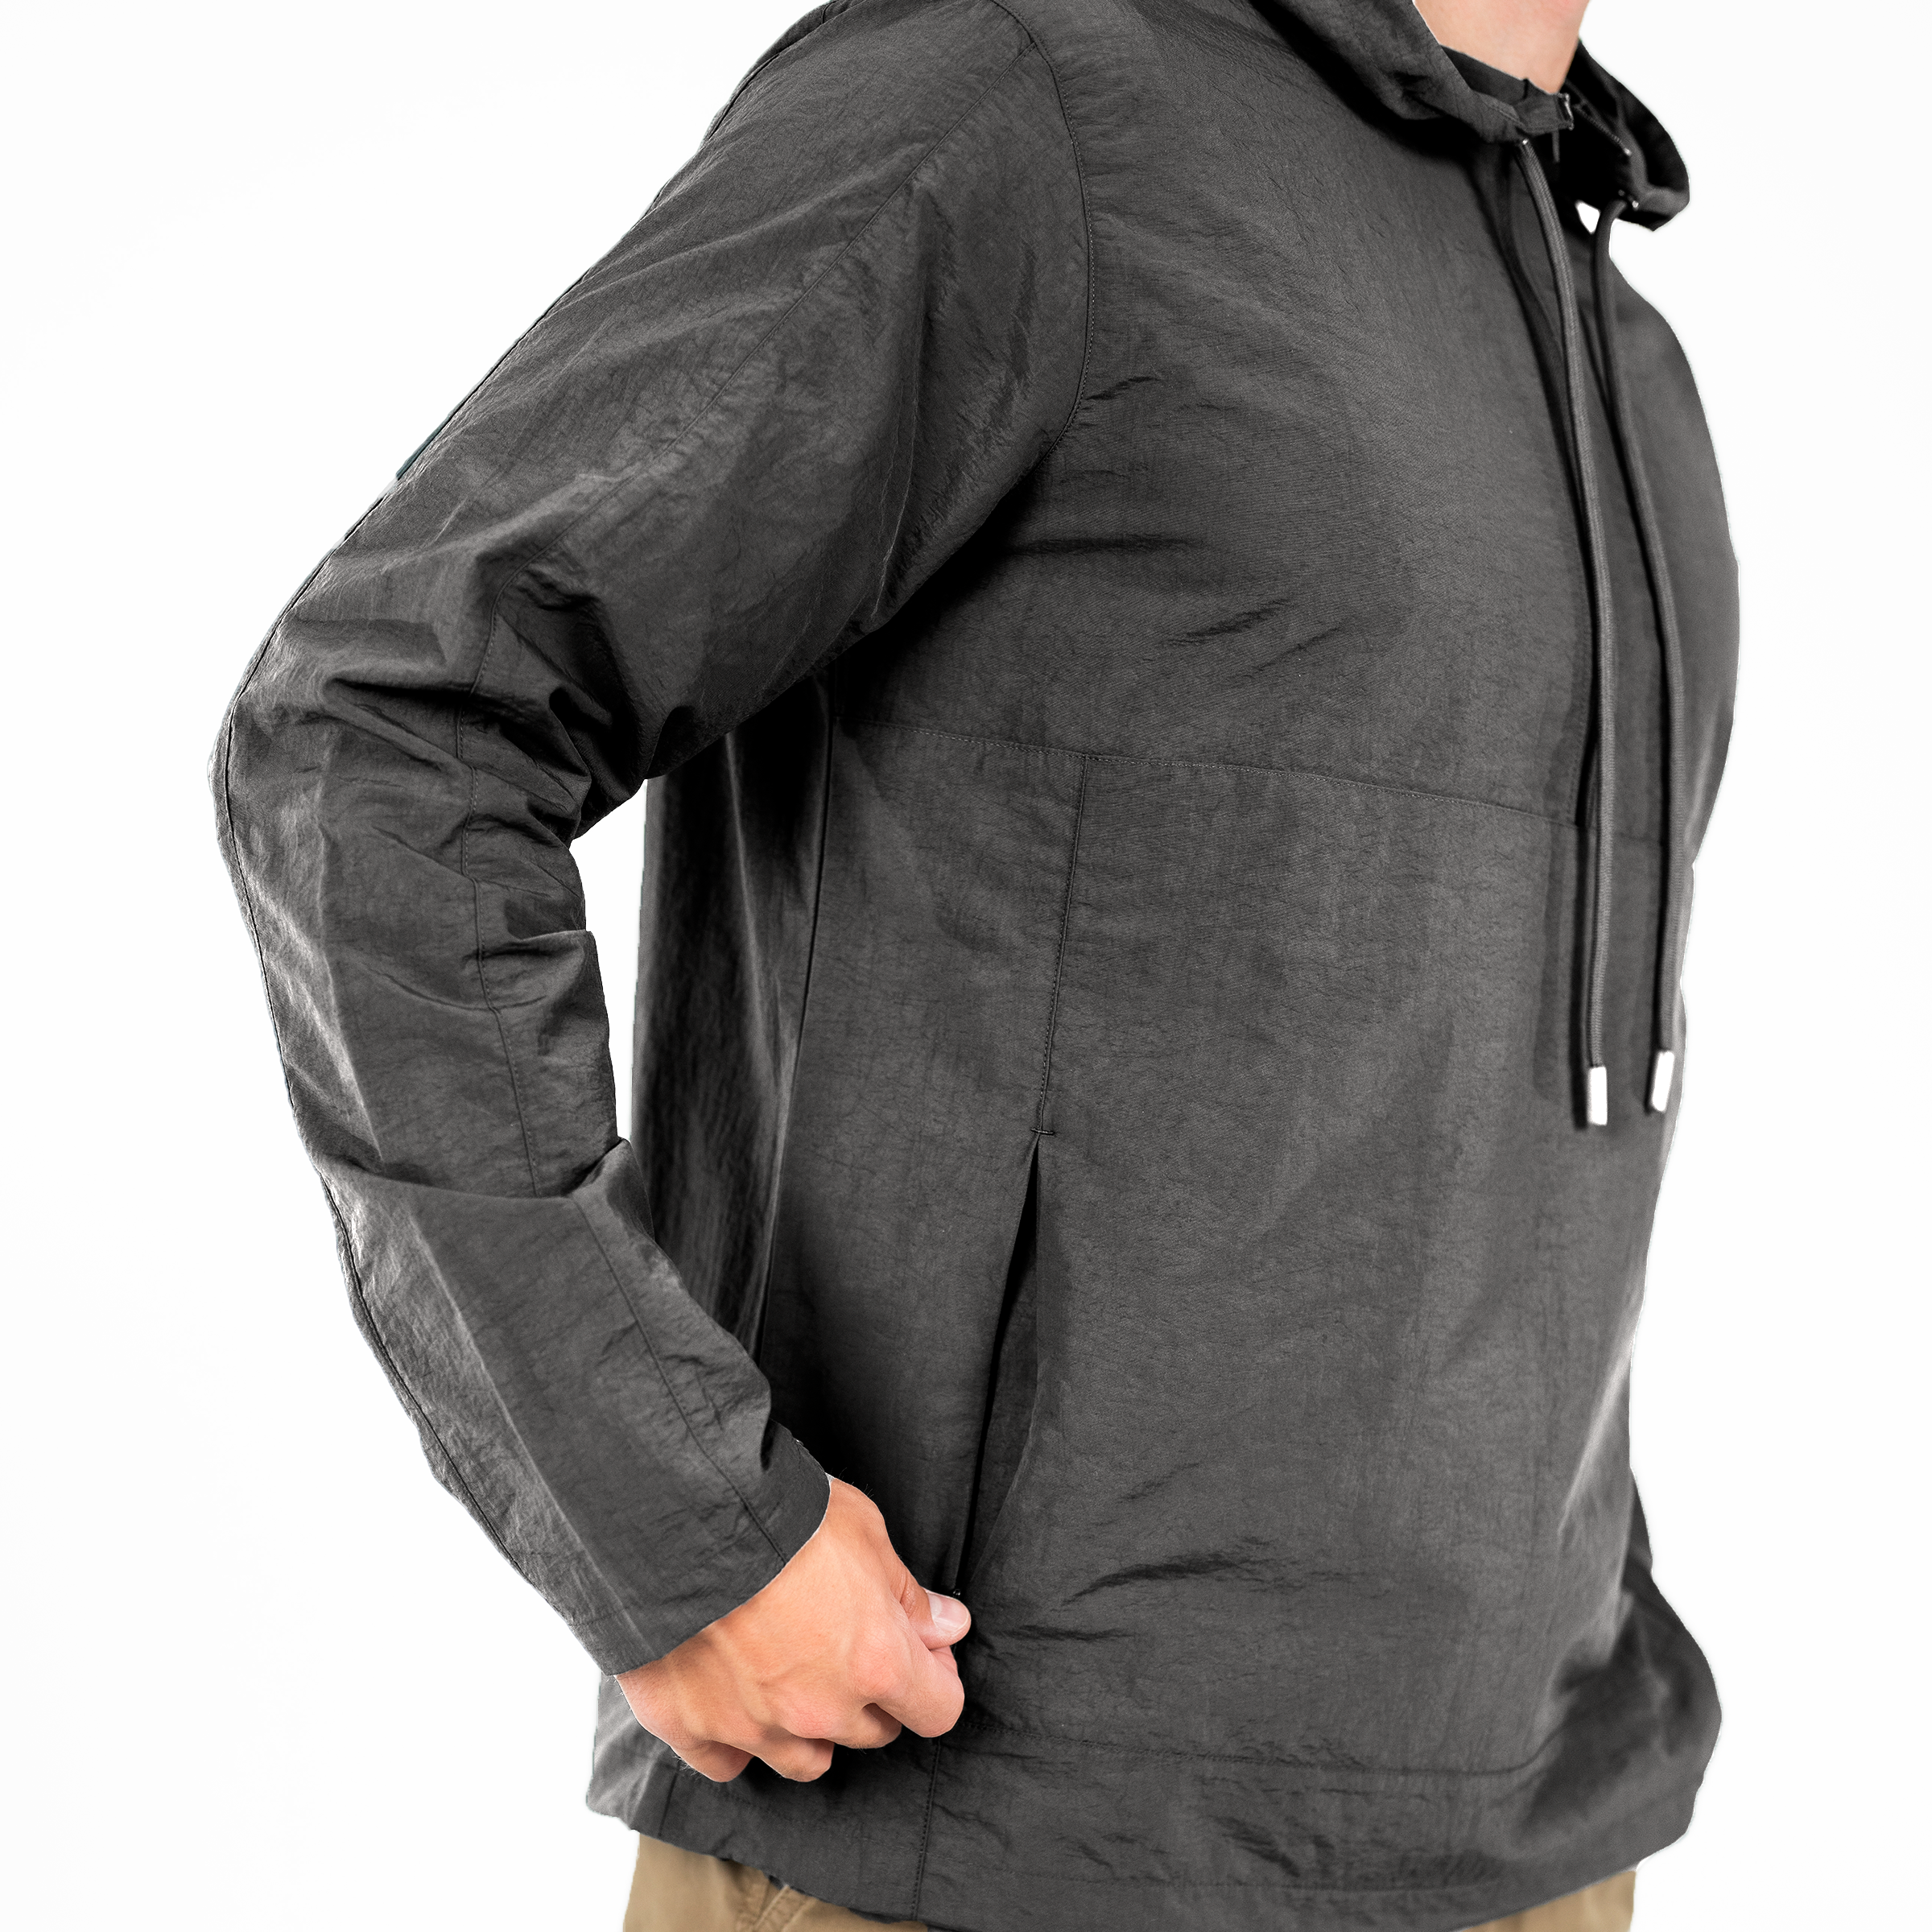 Windbreaker Jacket in Graphite grey on model close up of zipper on kangaroo pocket